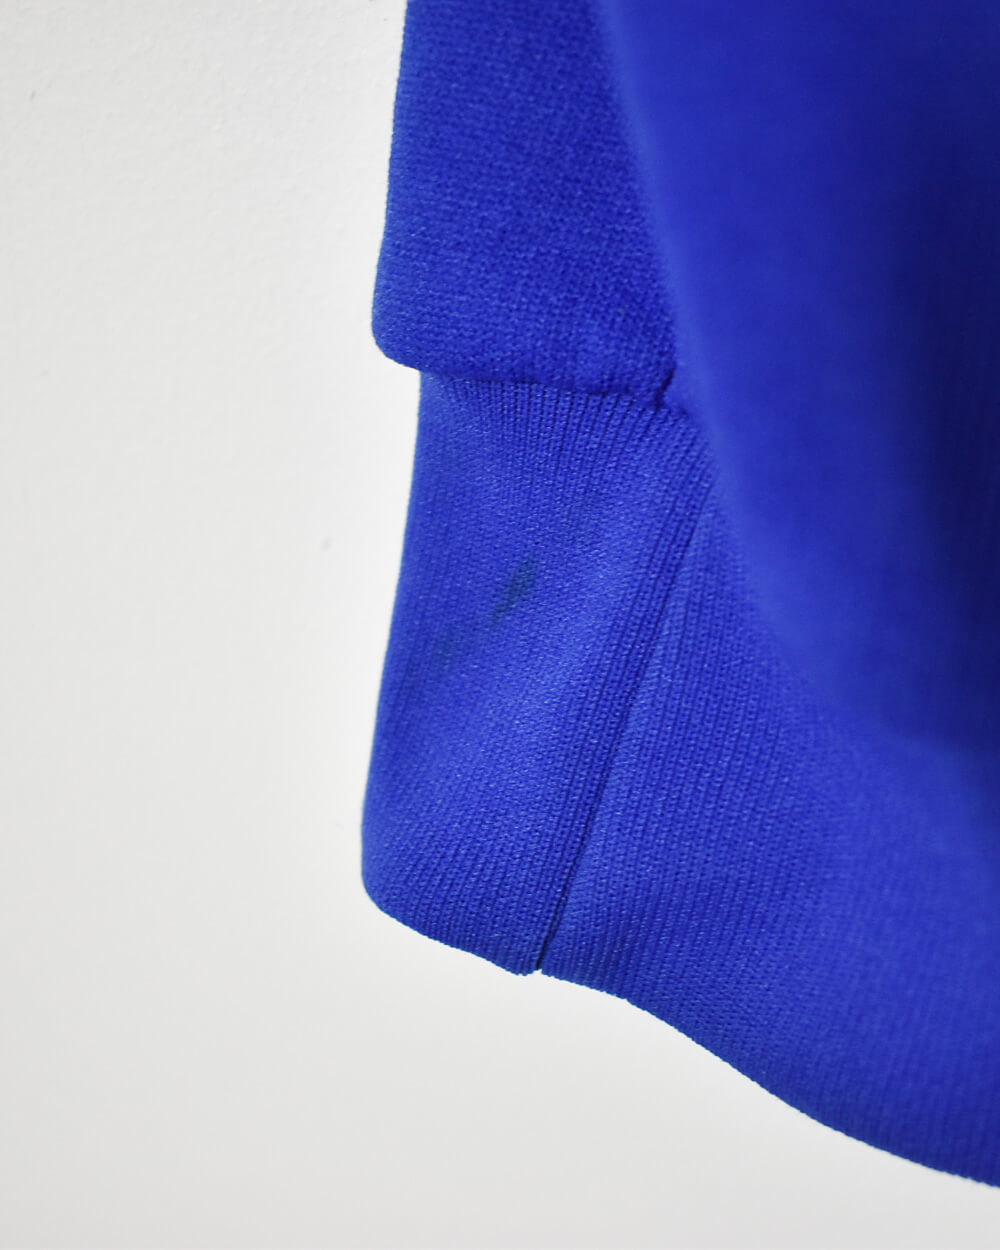 Blue Adidas Zip-Through Hoodie - Small